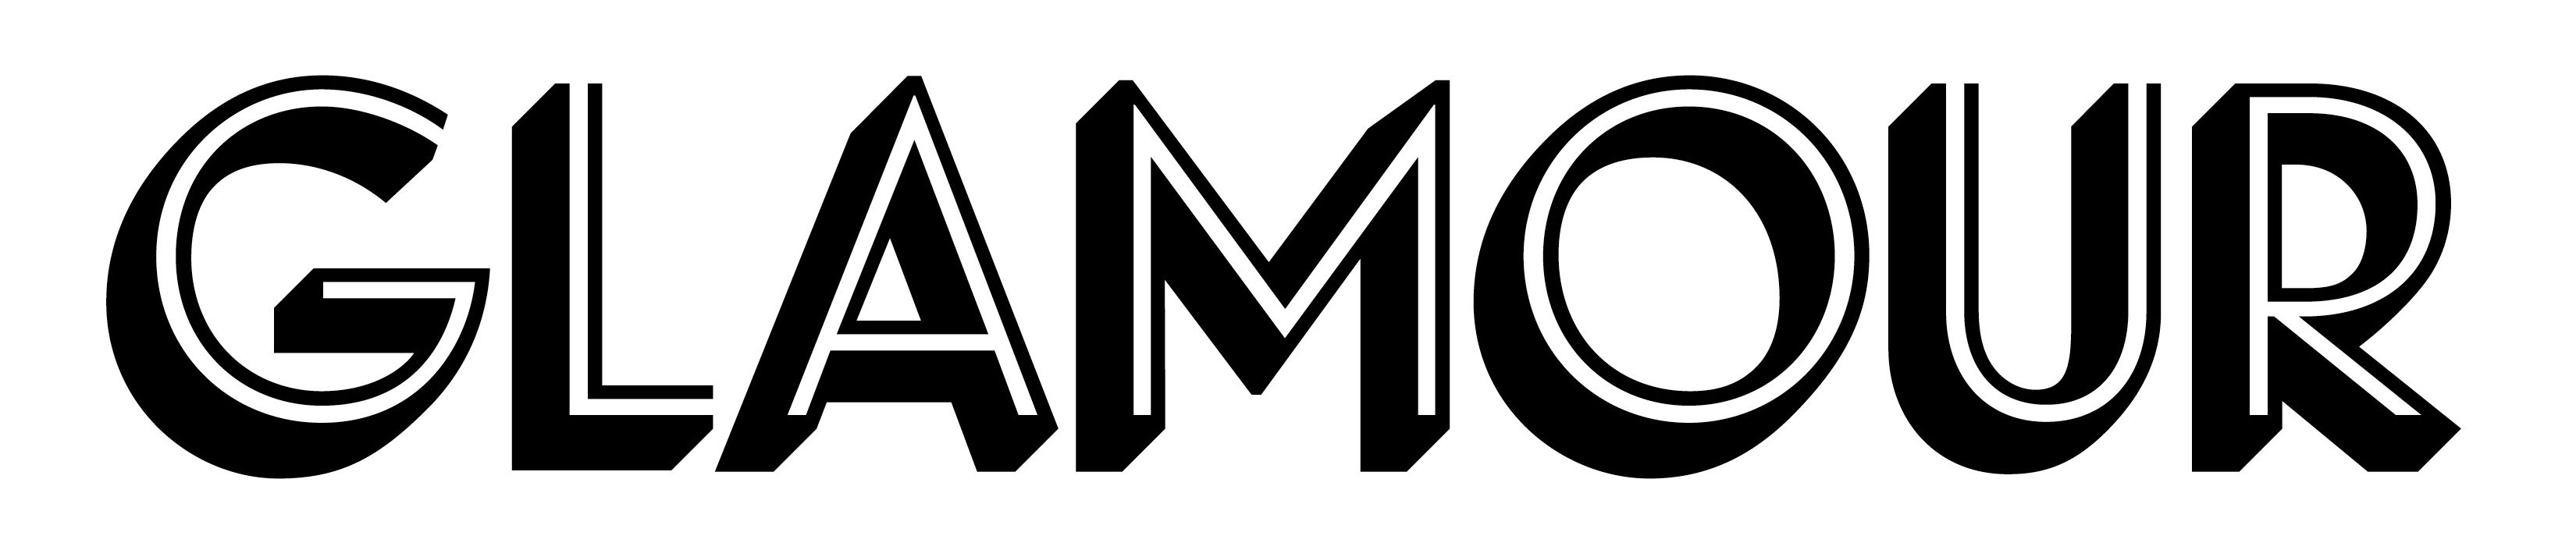 Trademark Logo GLAMOUR